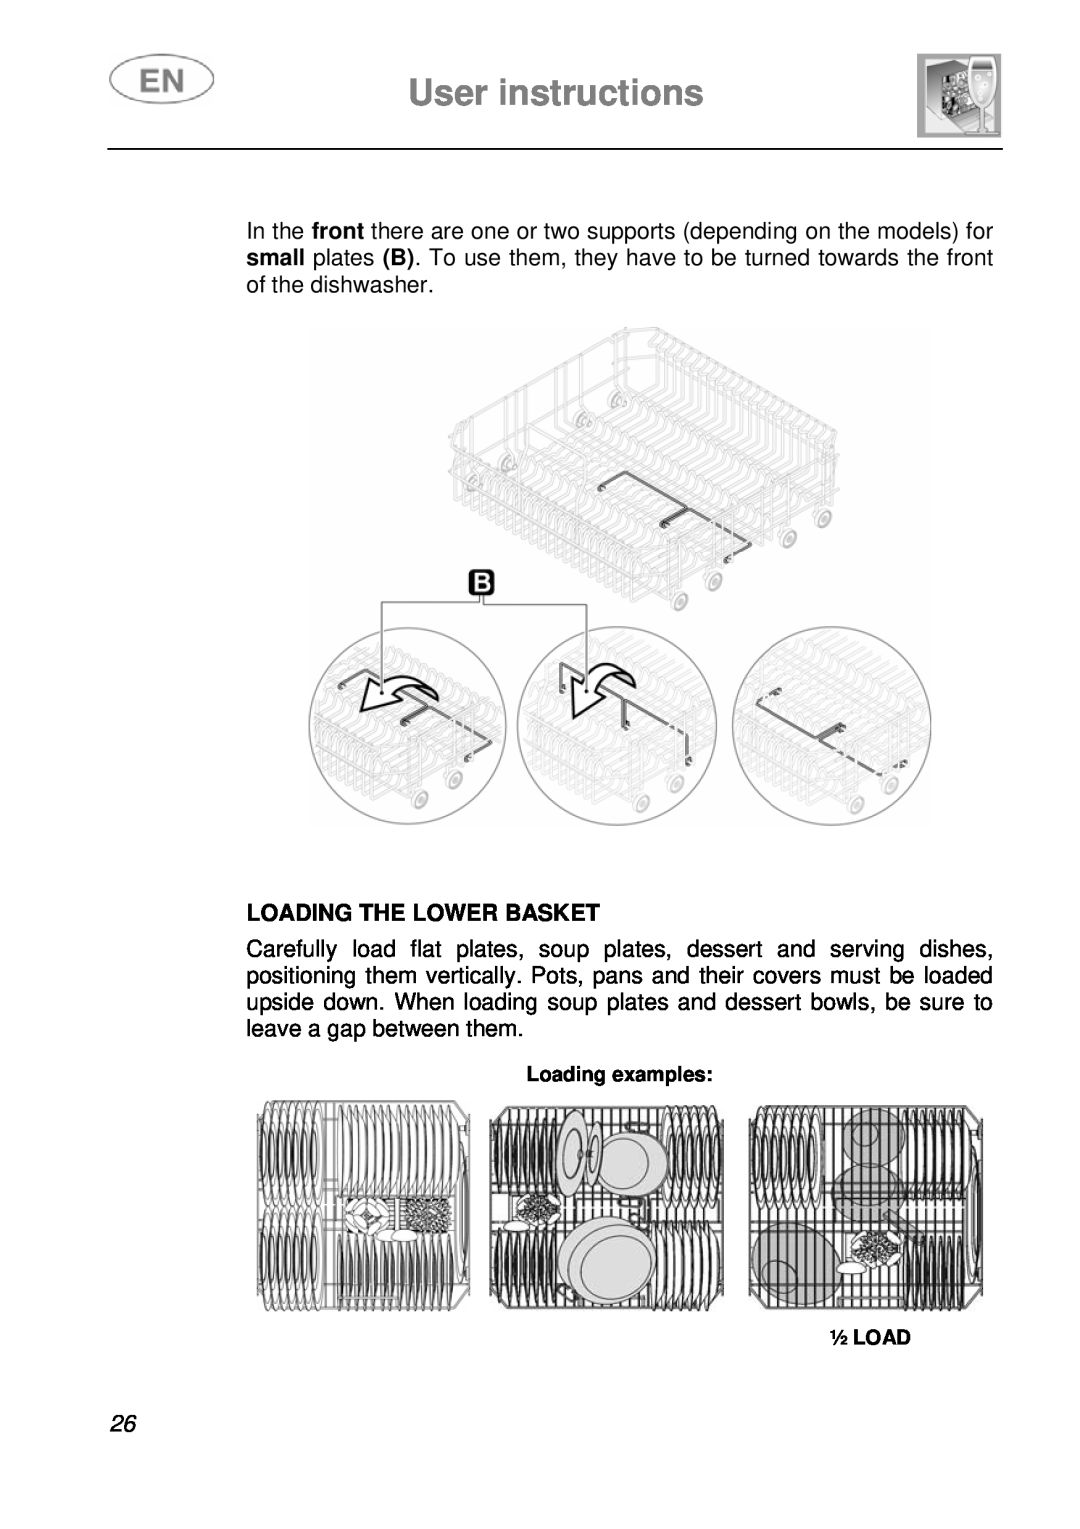 Smeg LSA14X7 instruction manual User instructions, Loading The Lower Basket, Loading examples ½ LOAD 